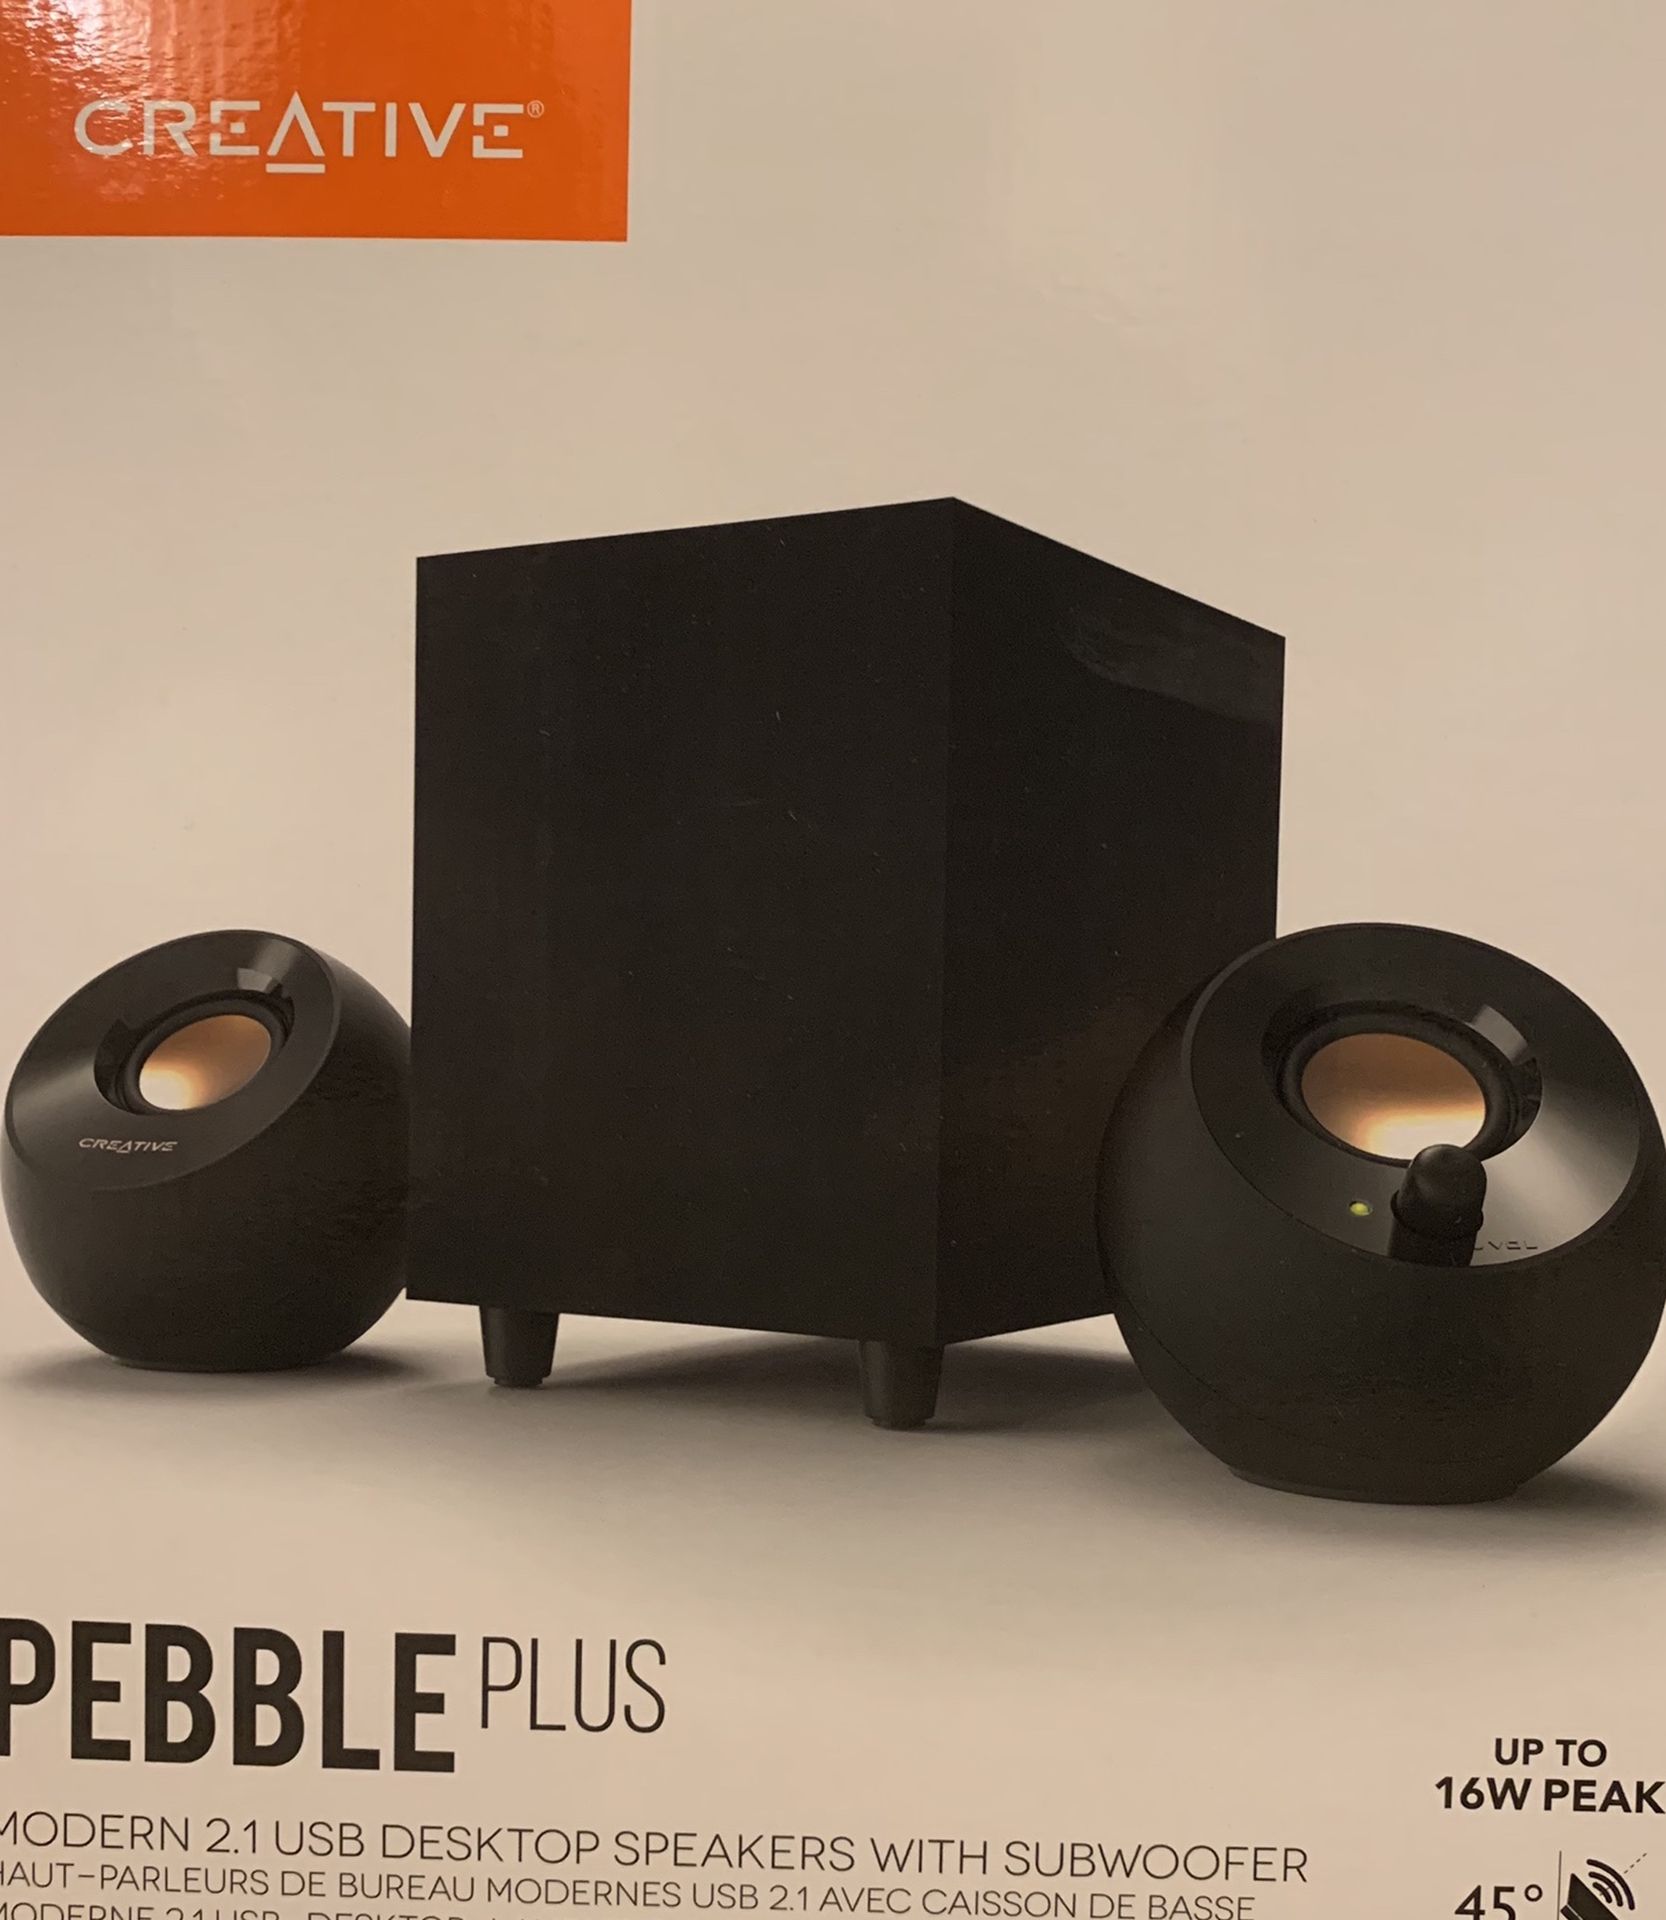 Brand New Pebble Plus 2.1 USB Desktop Speakers With Subwoofer